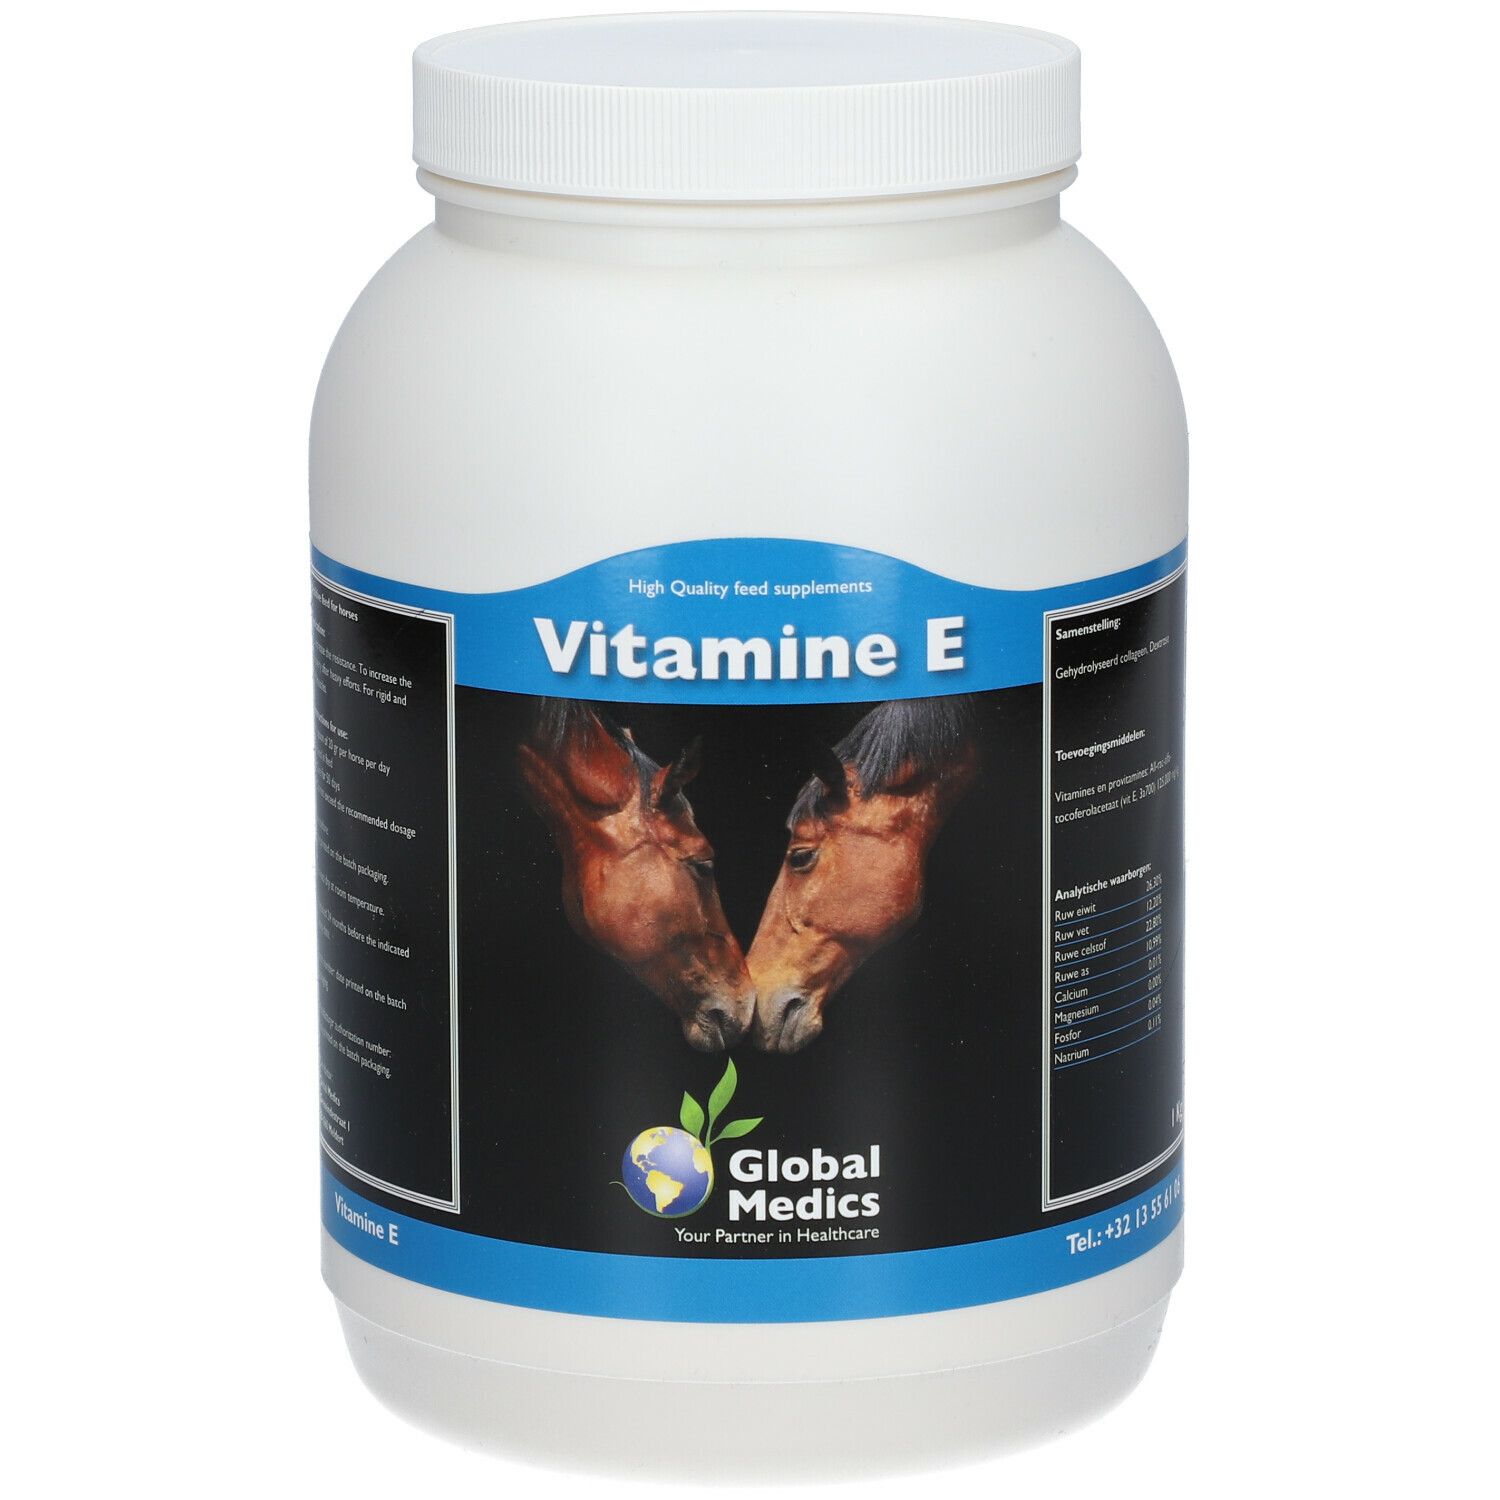 Global Medics Vitamine E